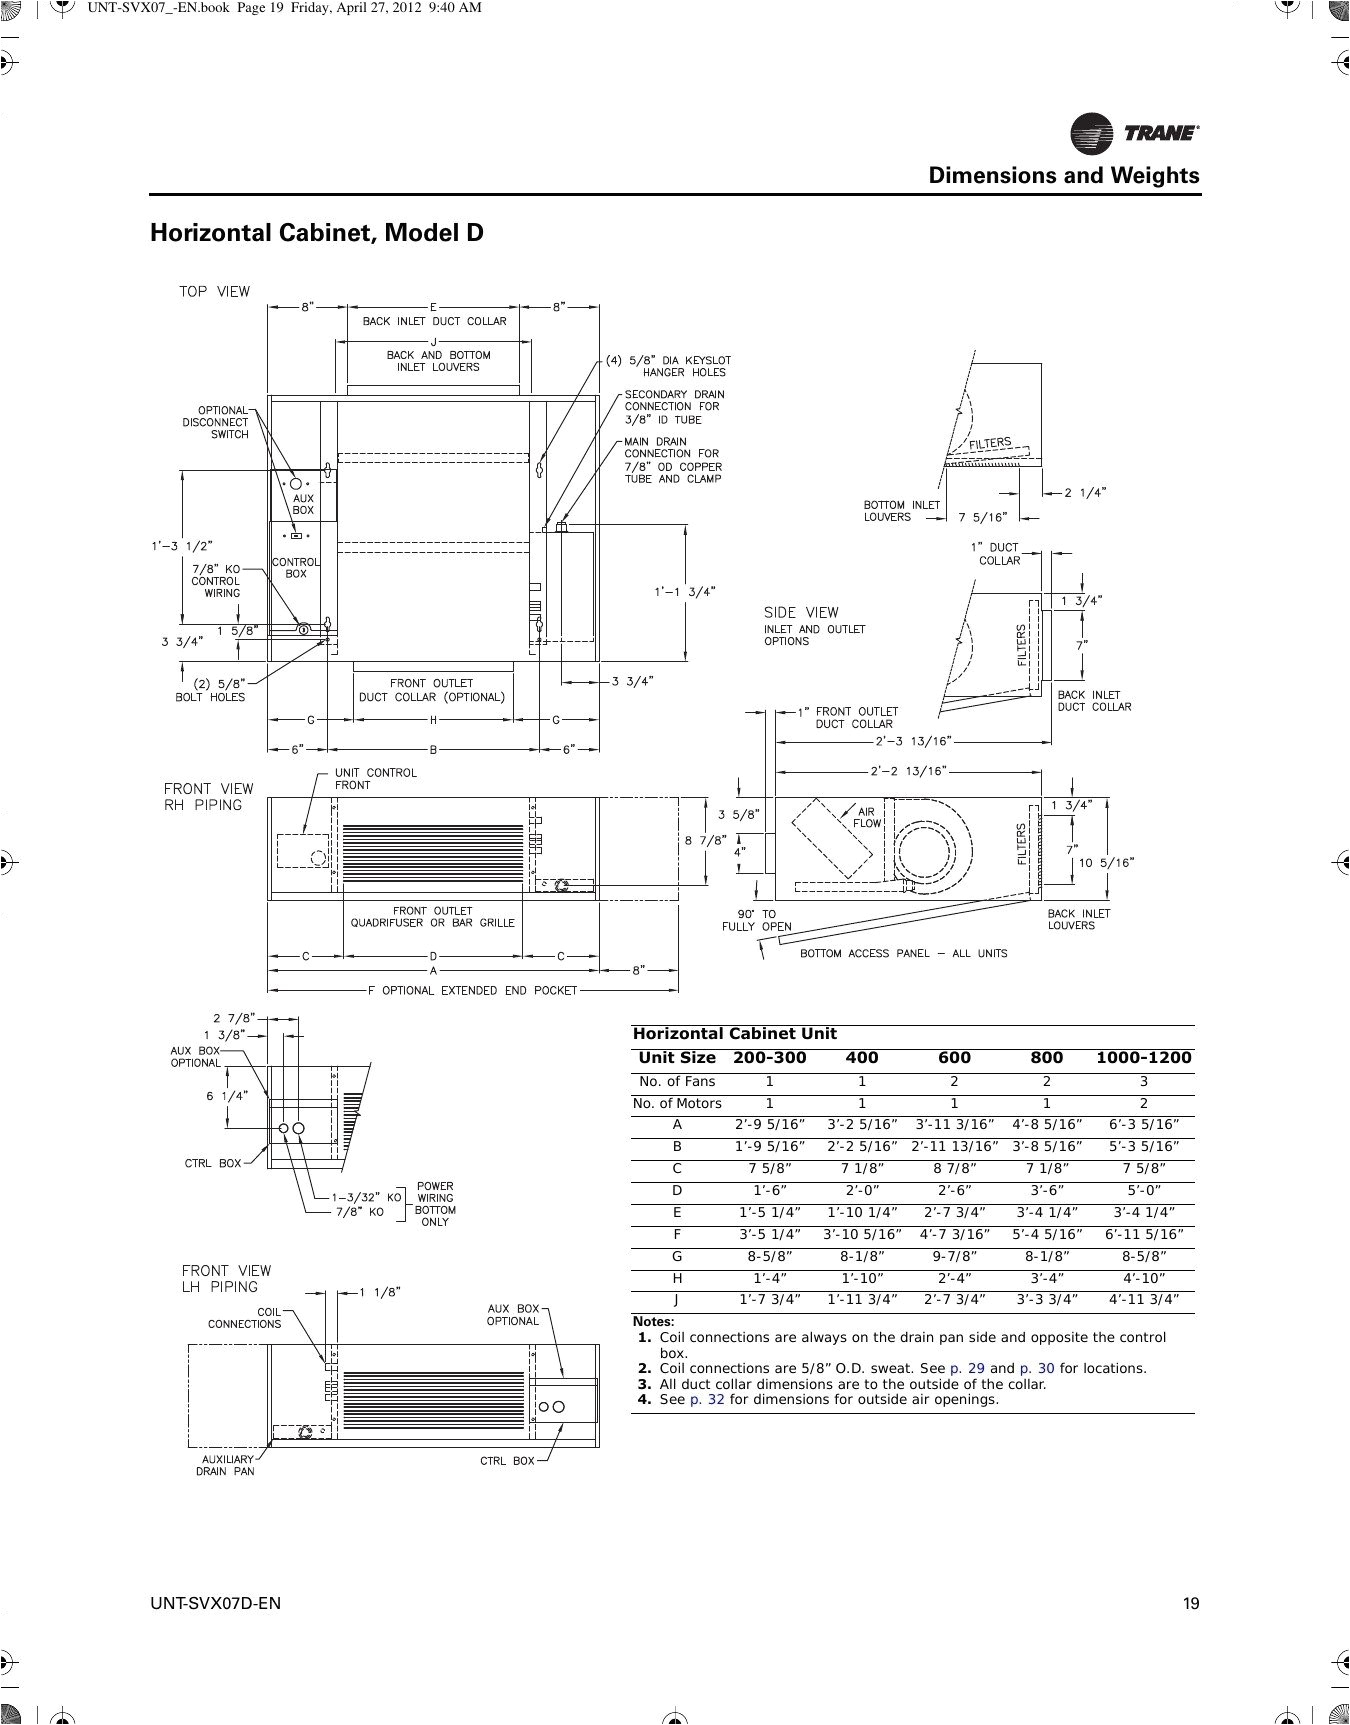 wiring unit diagram coil fan trane b12al03 wiring diagram sheet